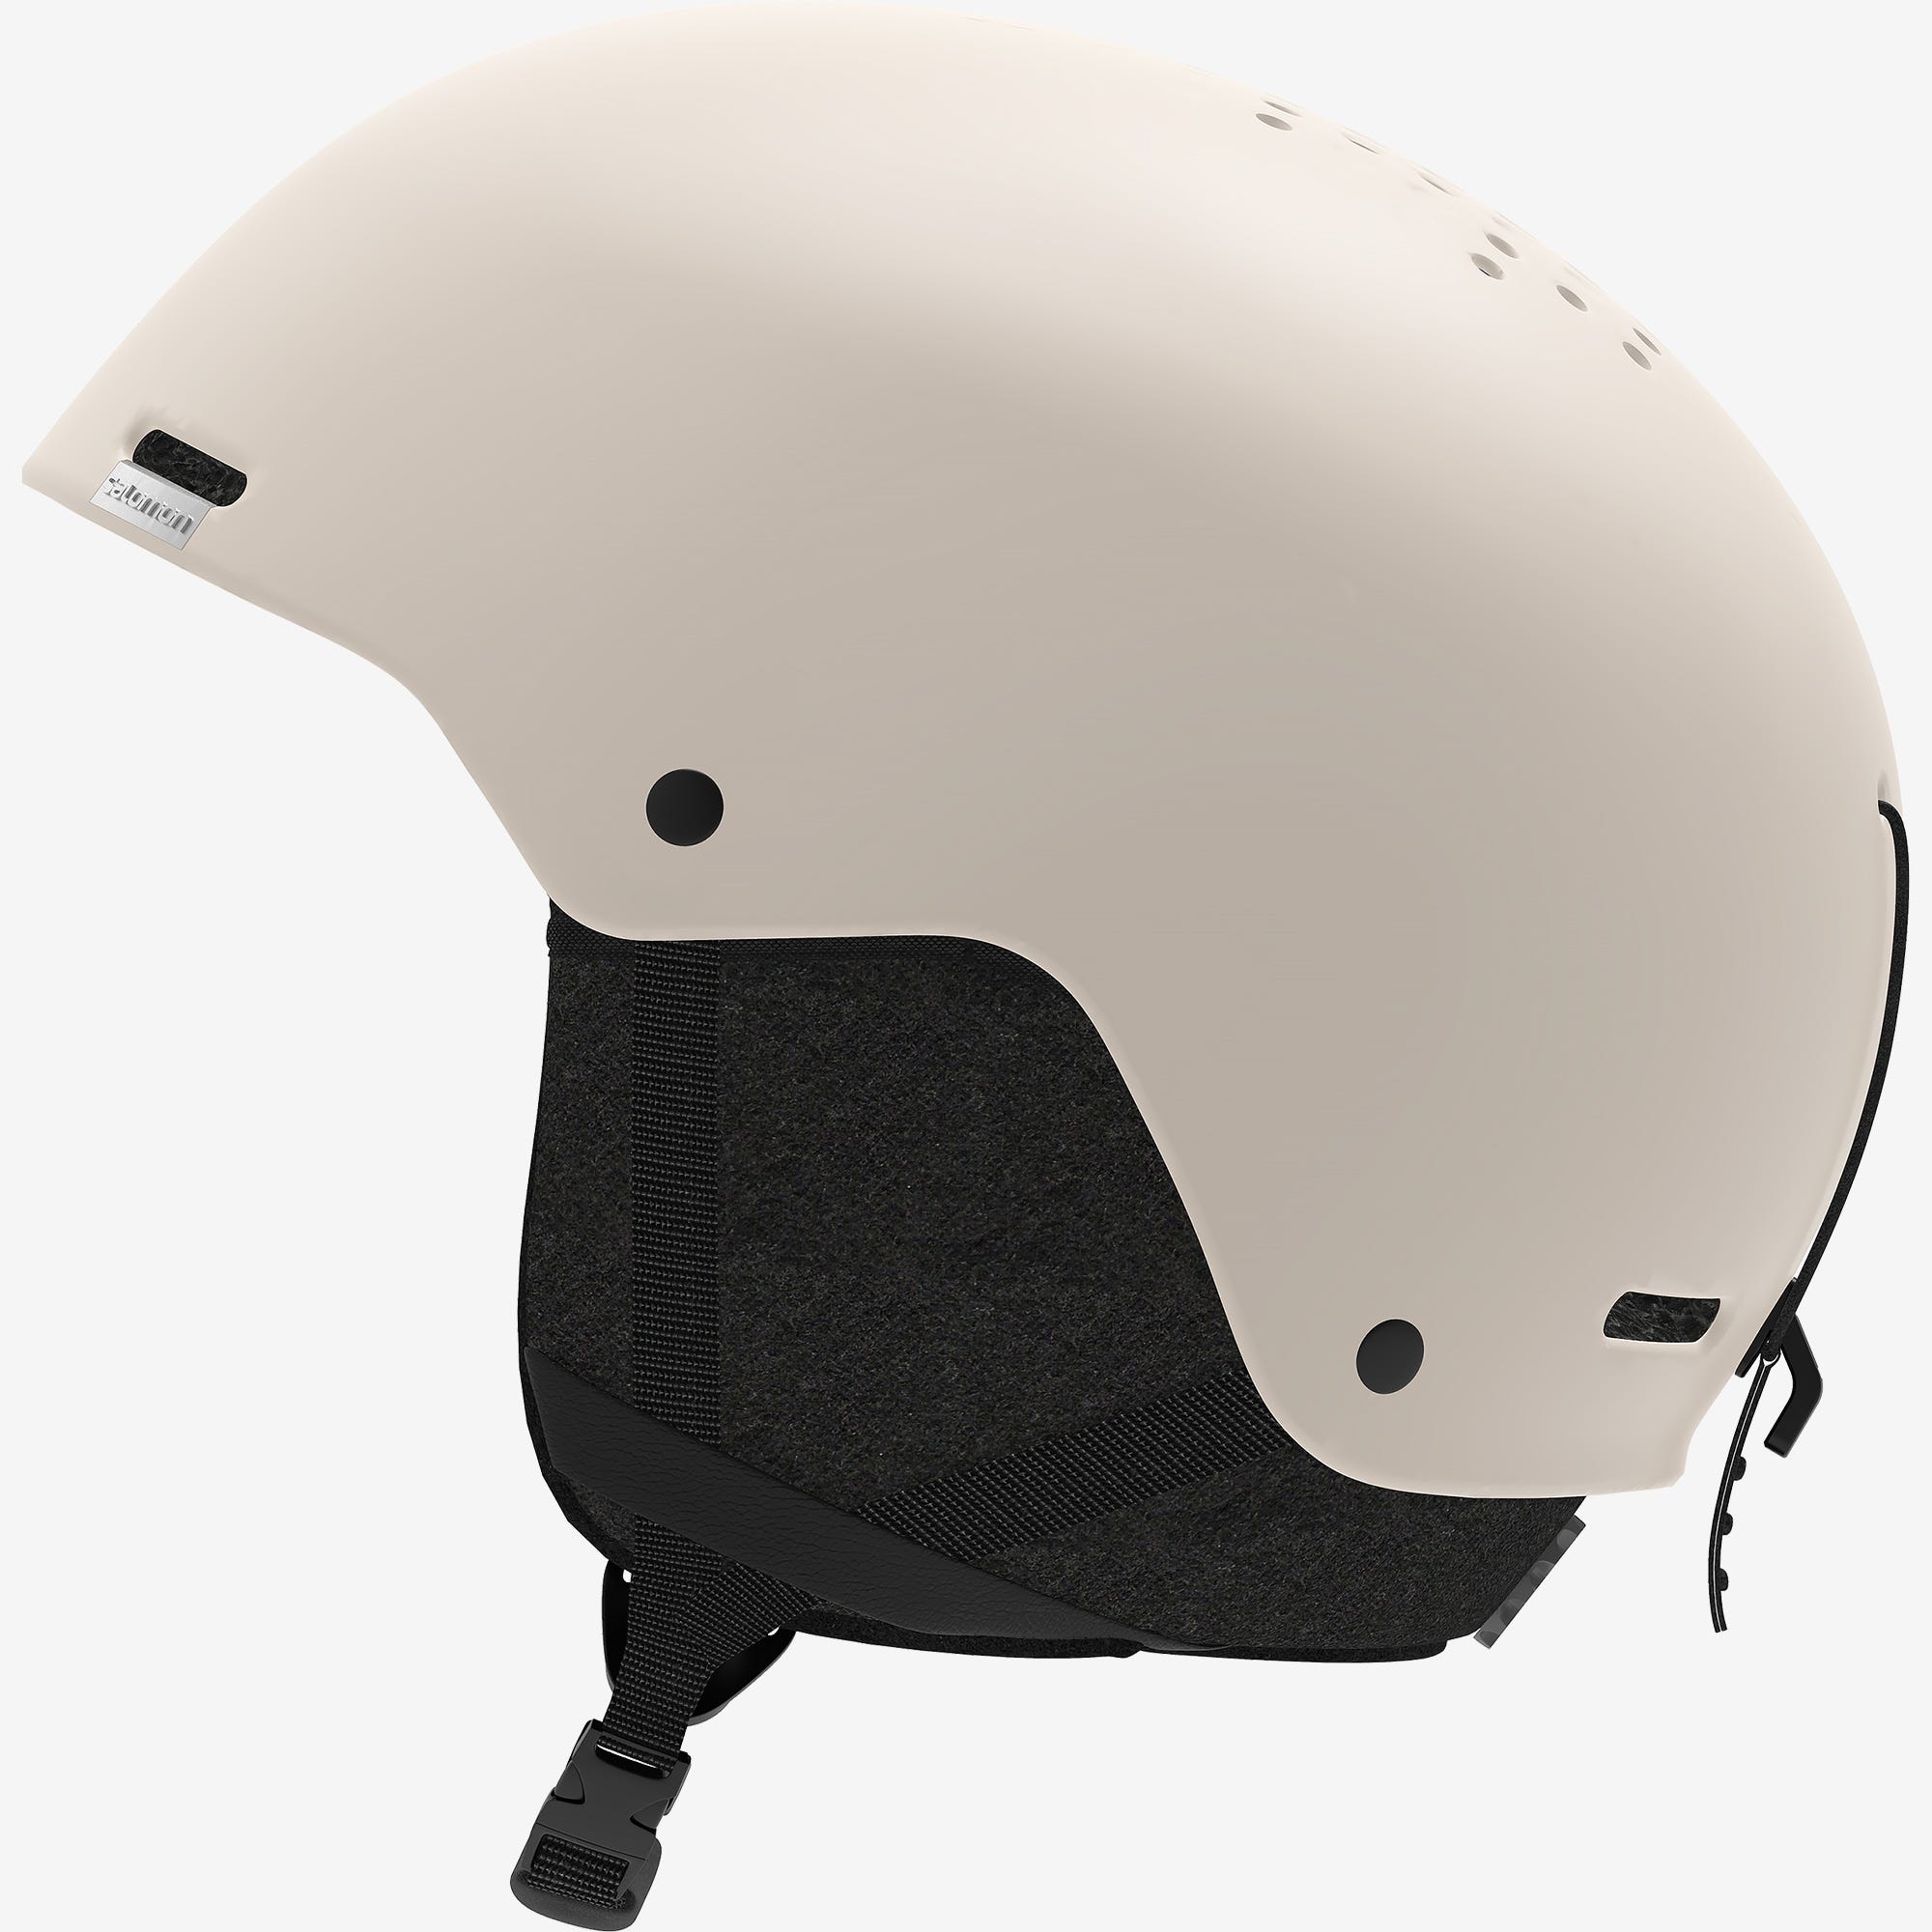 SPELL Women's Snow Helmet